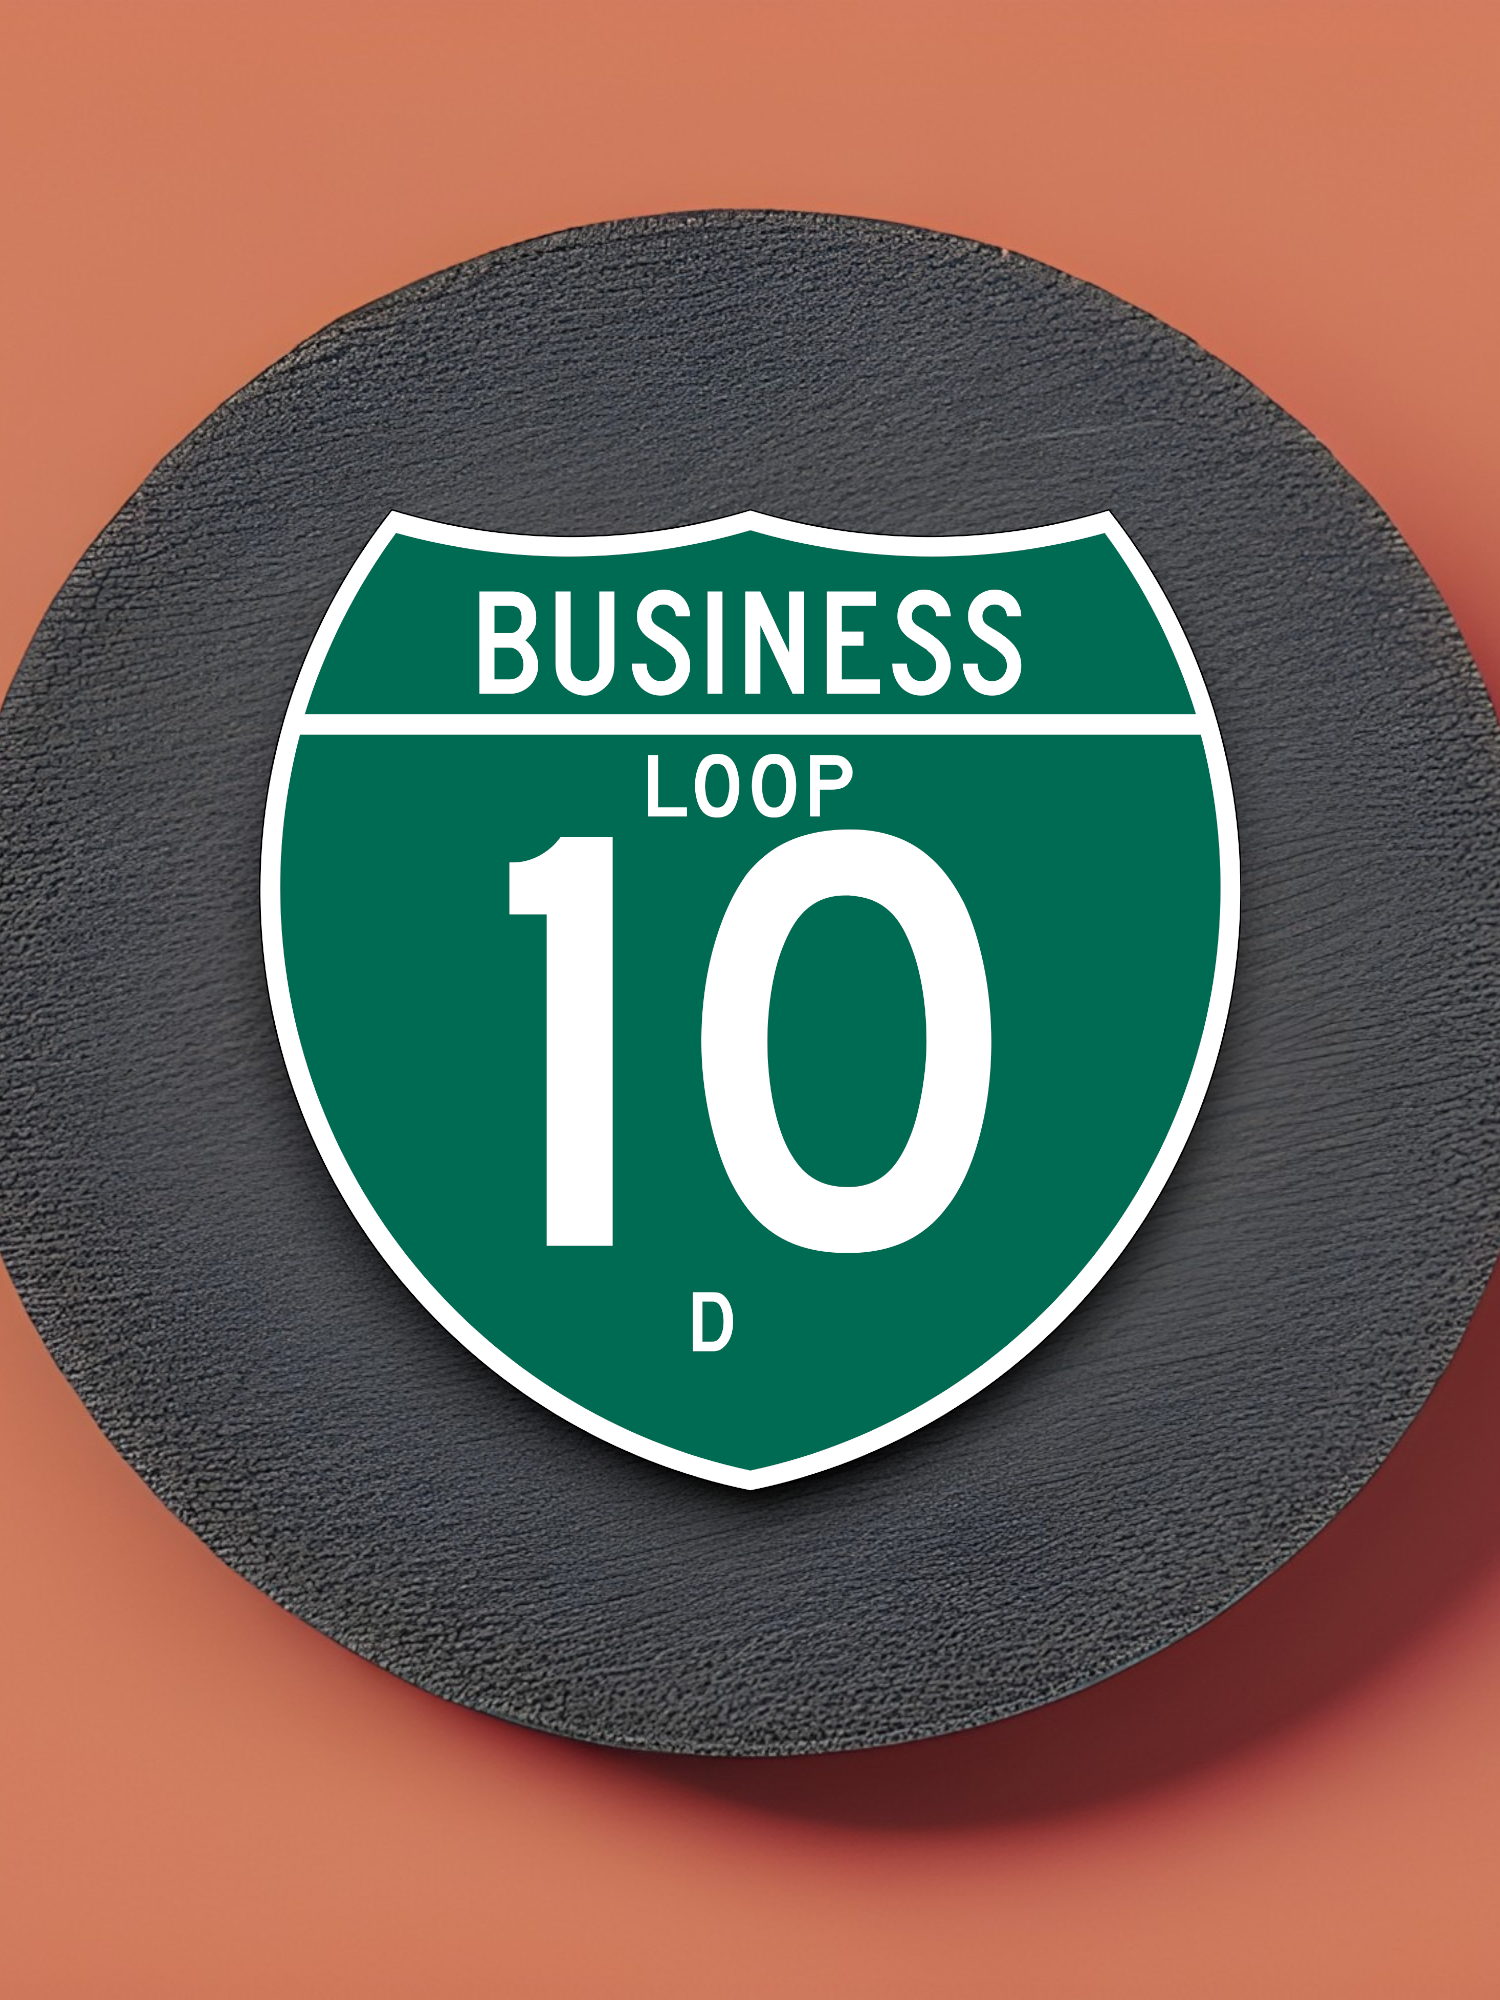 Business Interstate 10-D Texas Road Sign Sticker